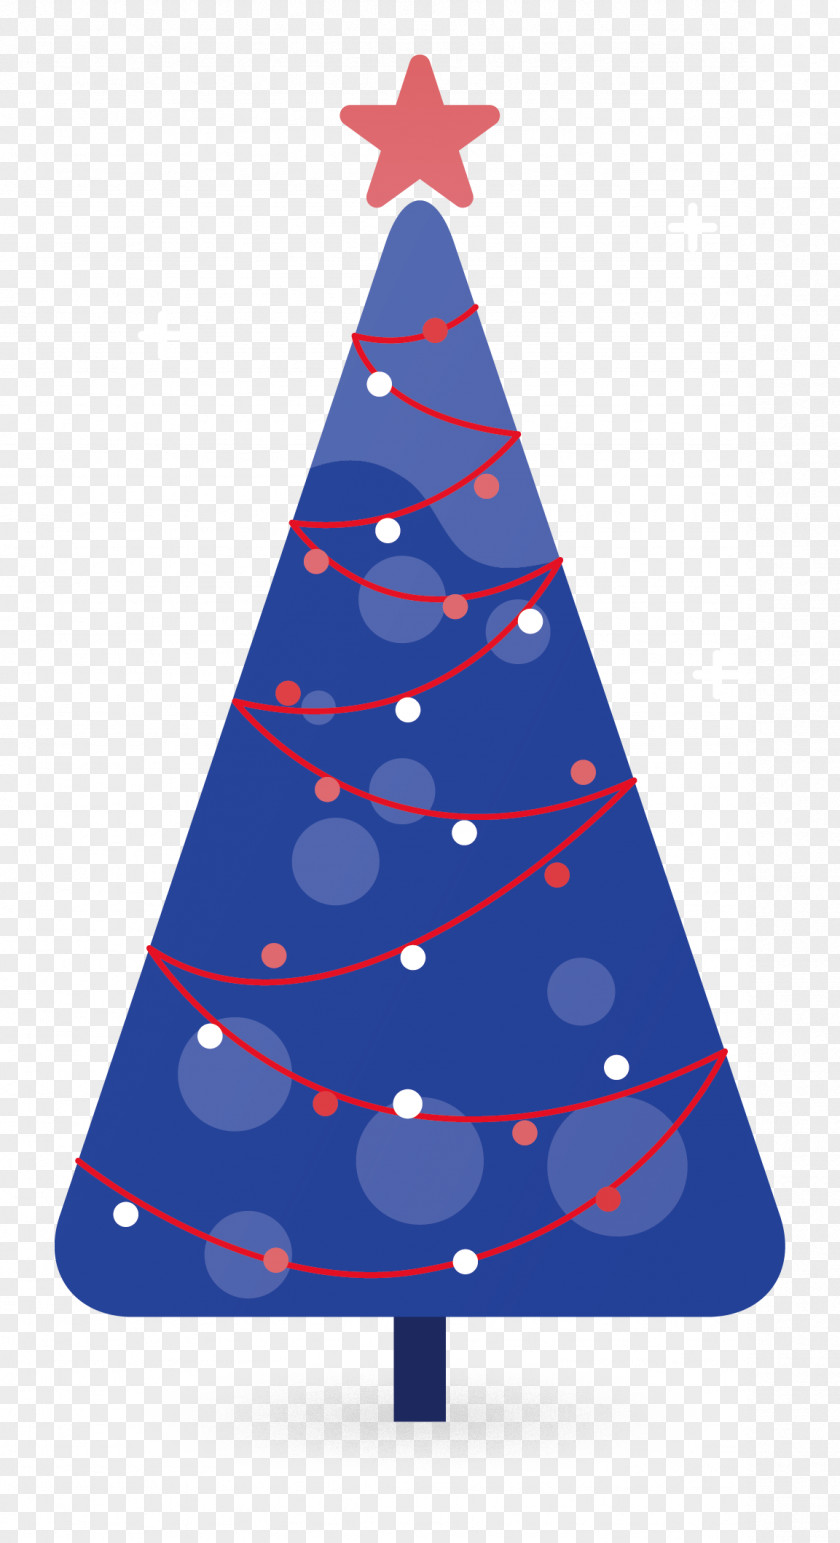 Blue Christmas Tree Decoration Clip Art PNG